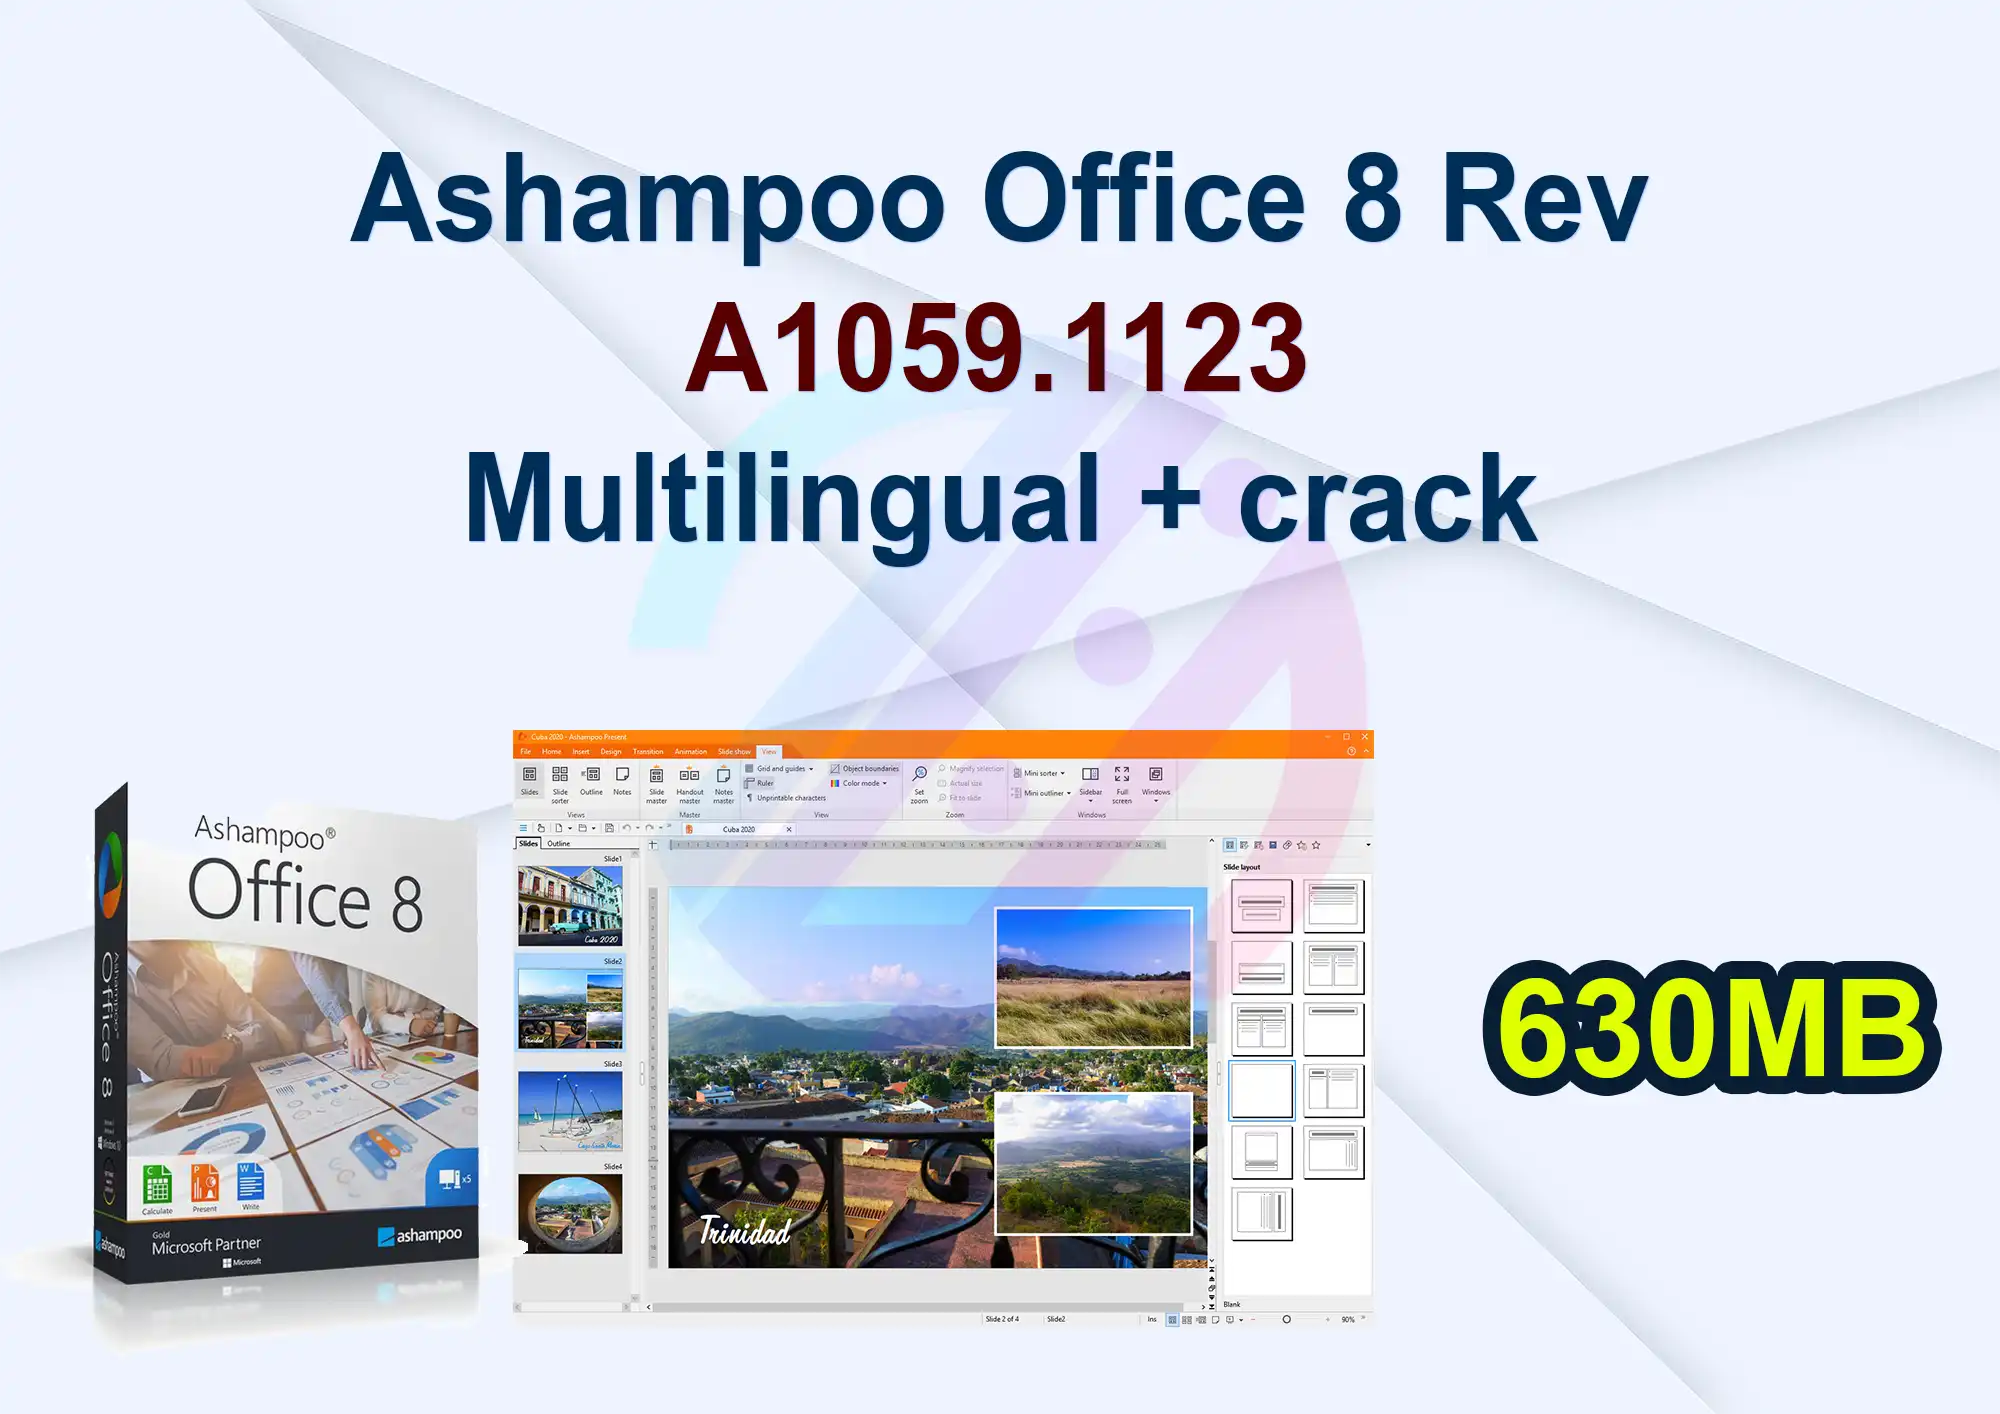 Ashampoo Office 8 Rev A1059.1123 Multilingual + crack